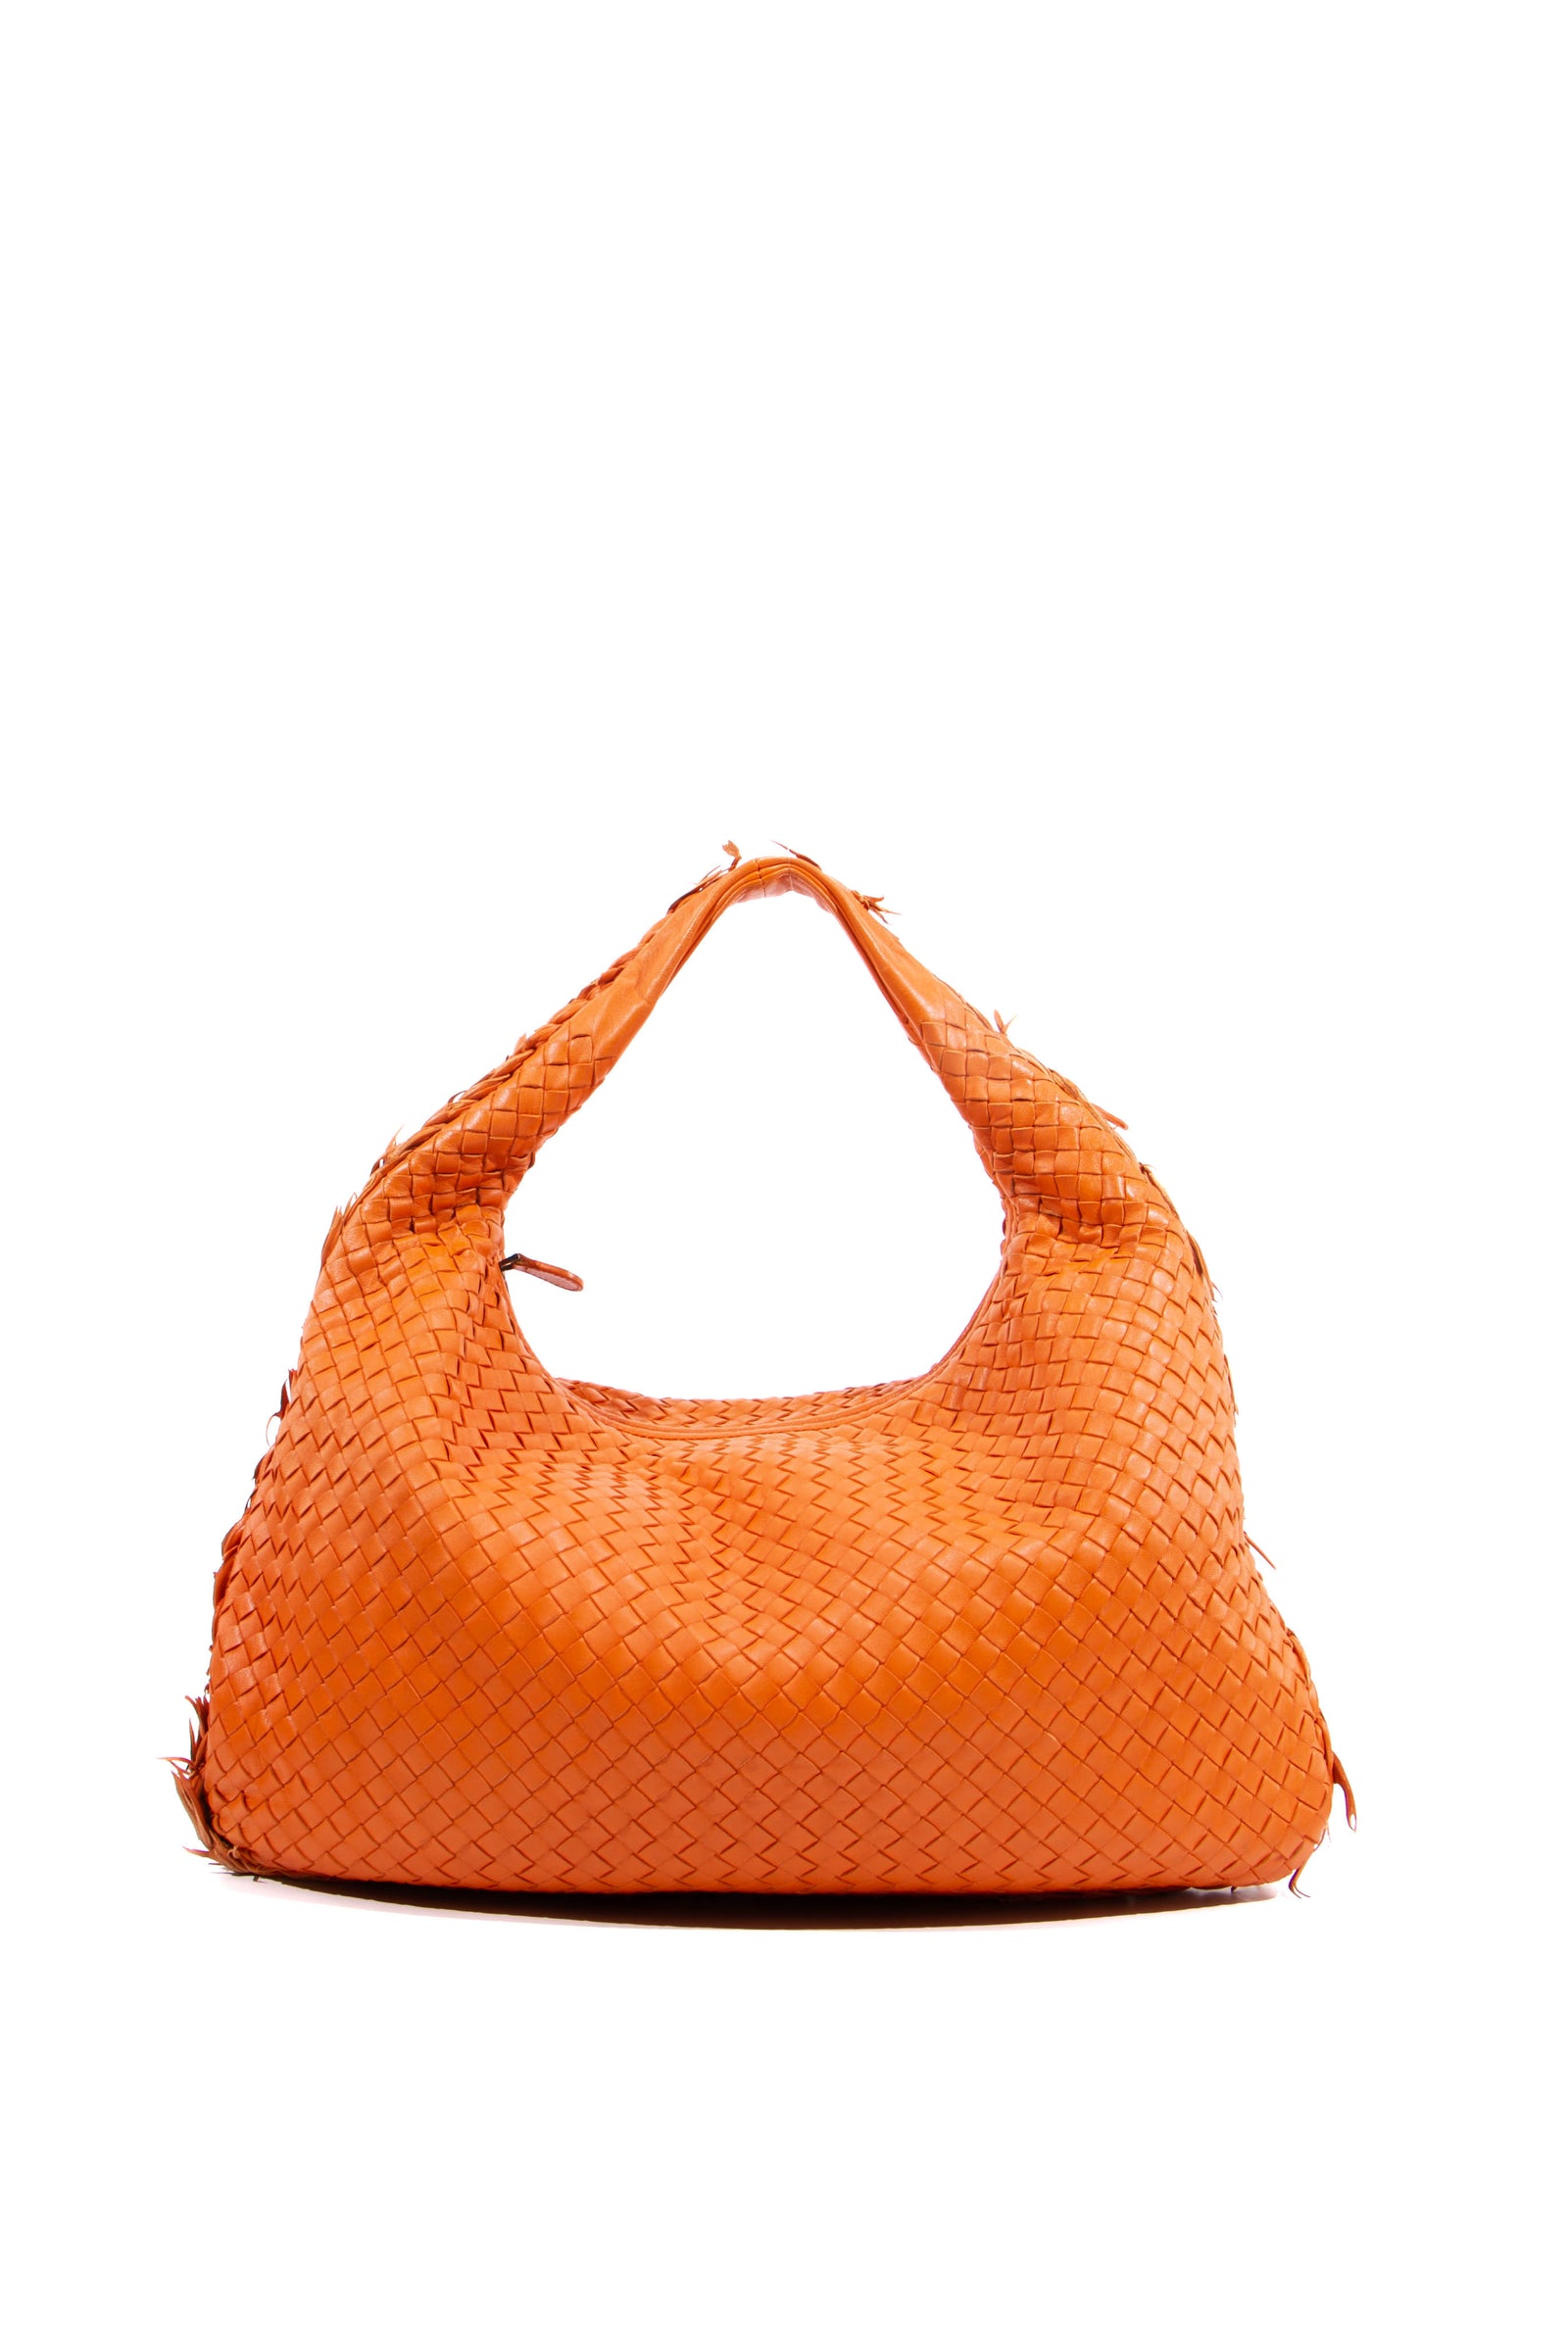 Bottega Veneta Bags - Find your Bottega Veneta Bag at Collector's